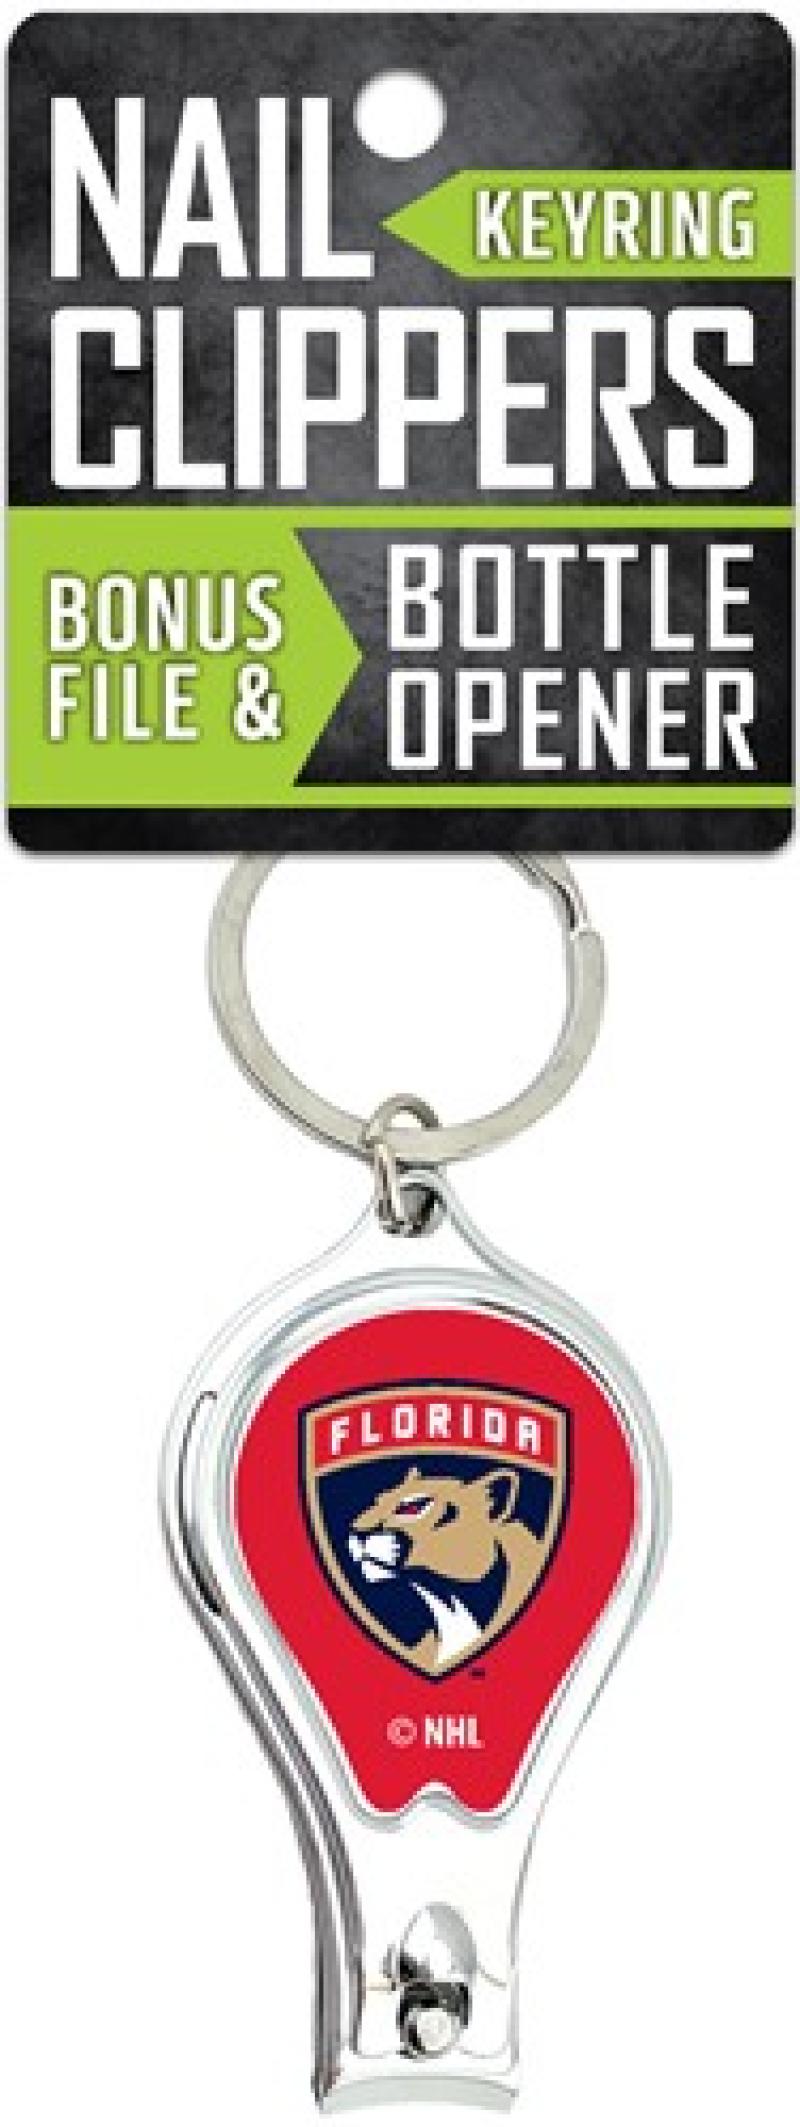 Florida Panthers Nail Clipper Keyring w/Bonus File & Bottle Opener Image 1